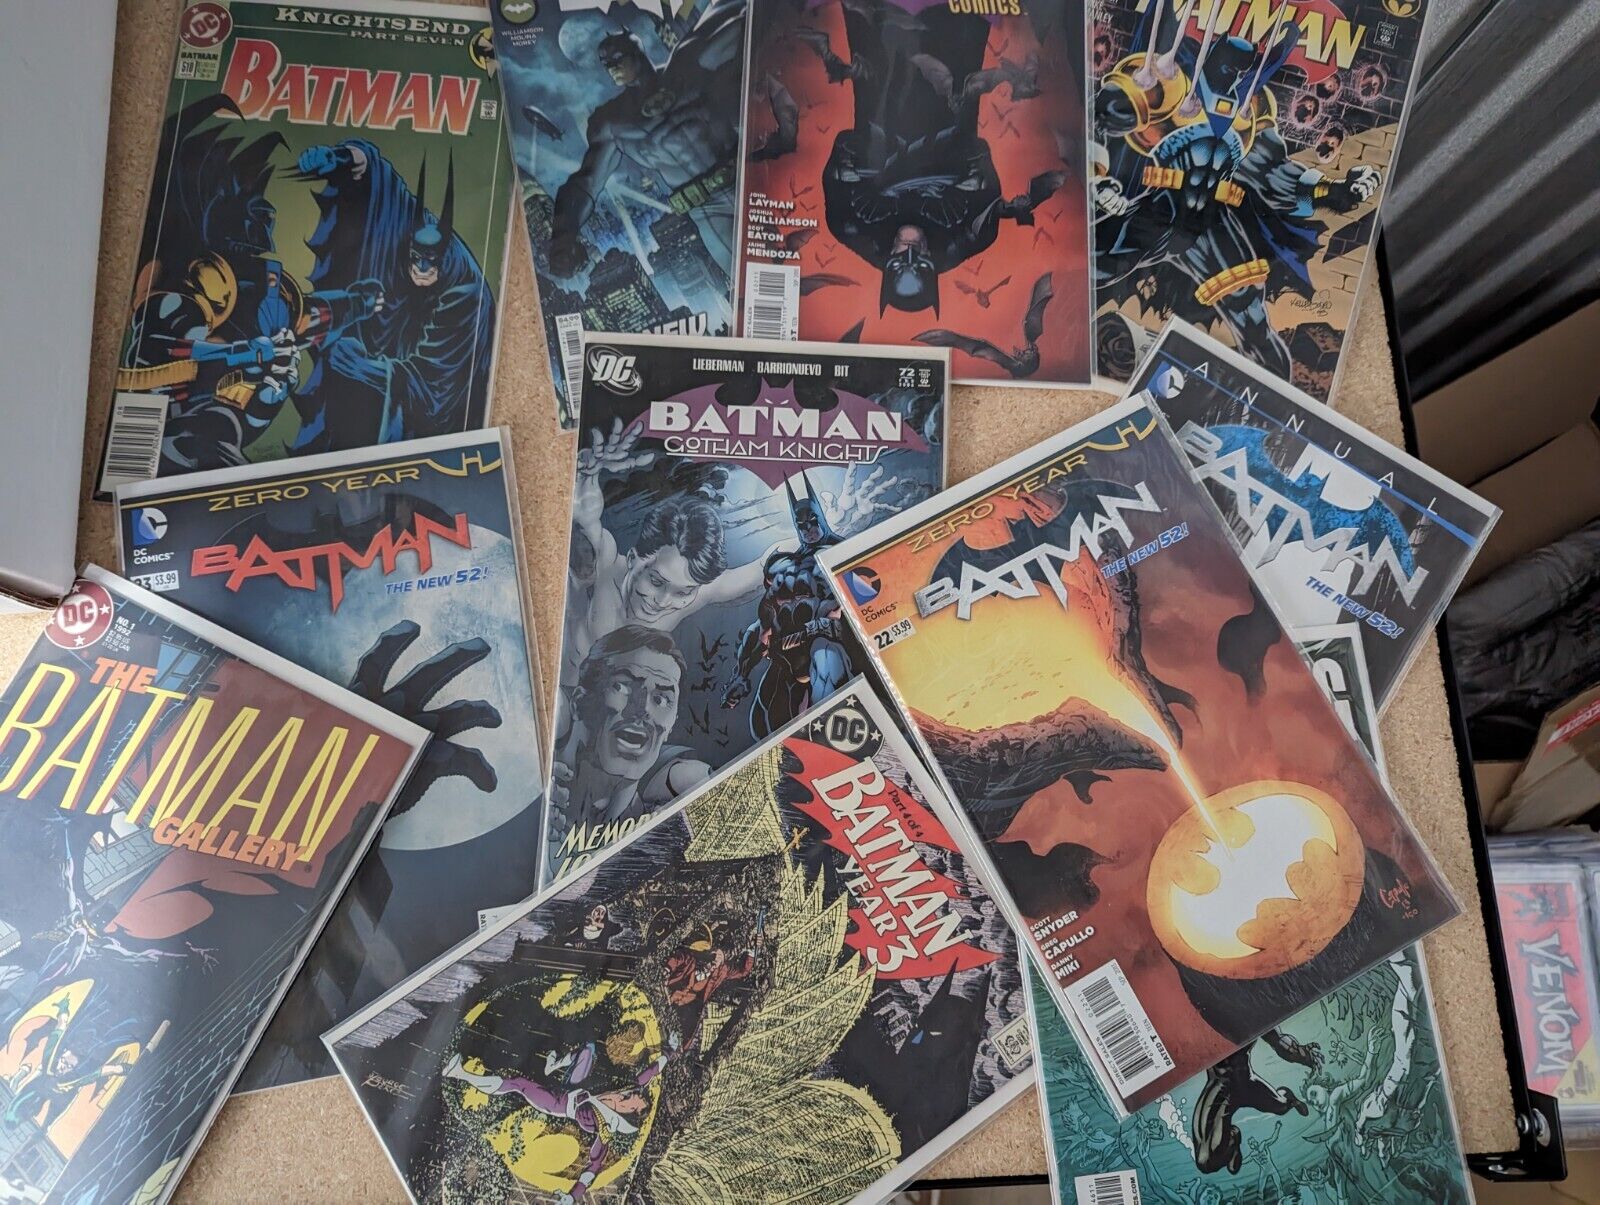 LOT OF 10 Batman Random Comic books - No Duplicates Boarded and Bagged